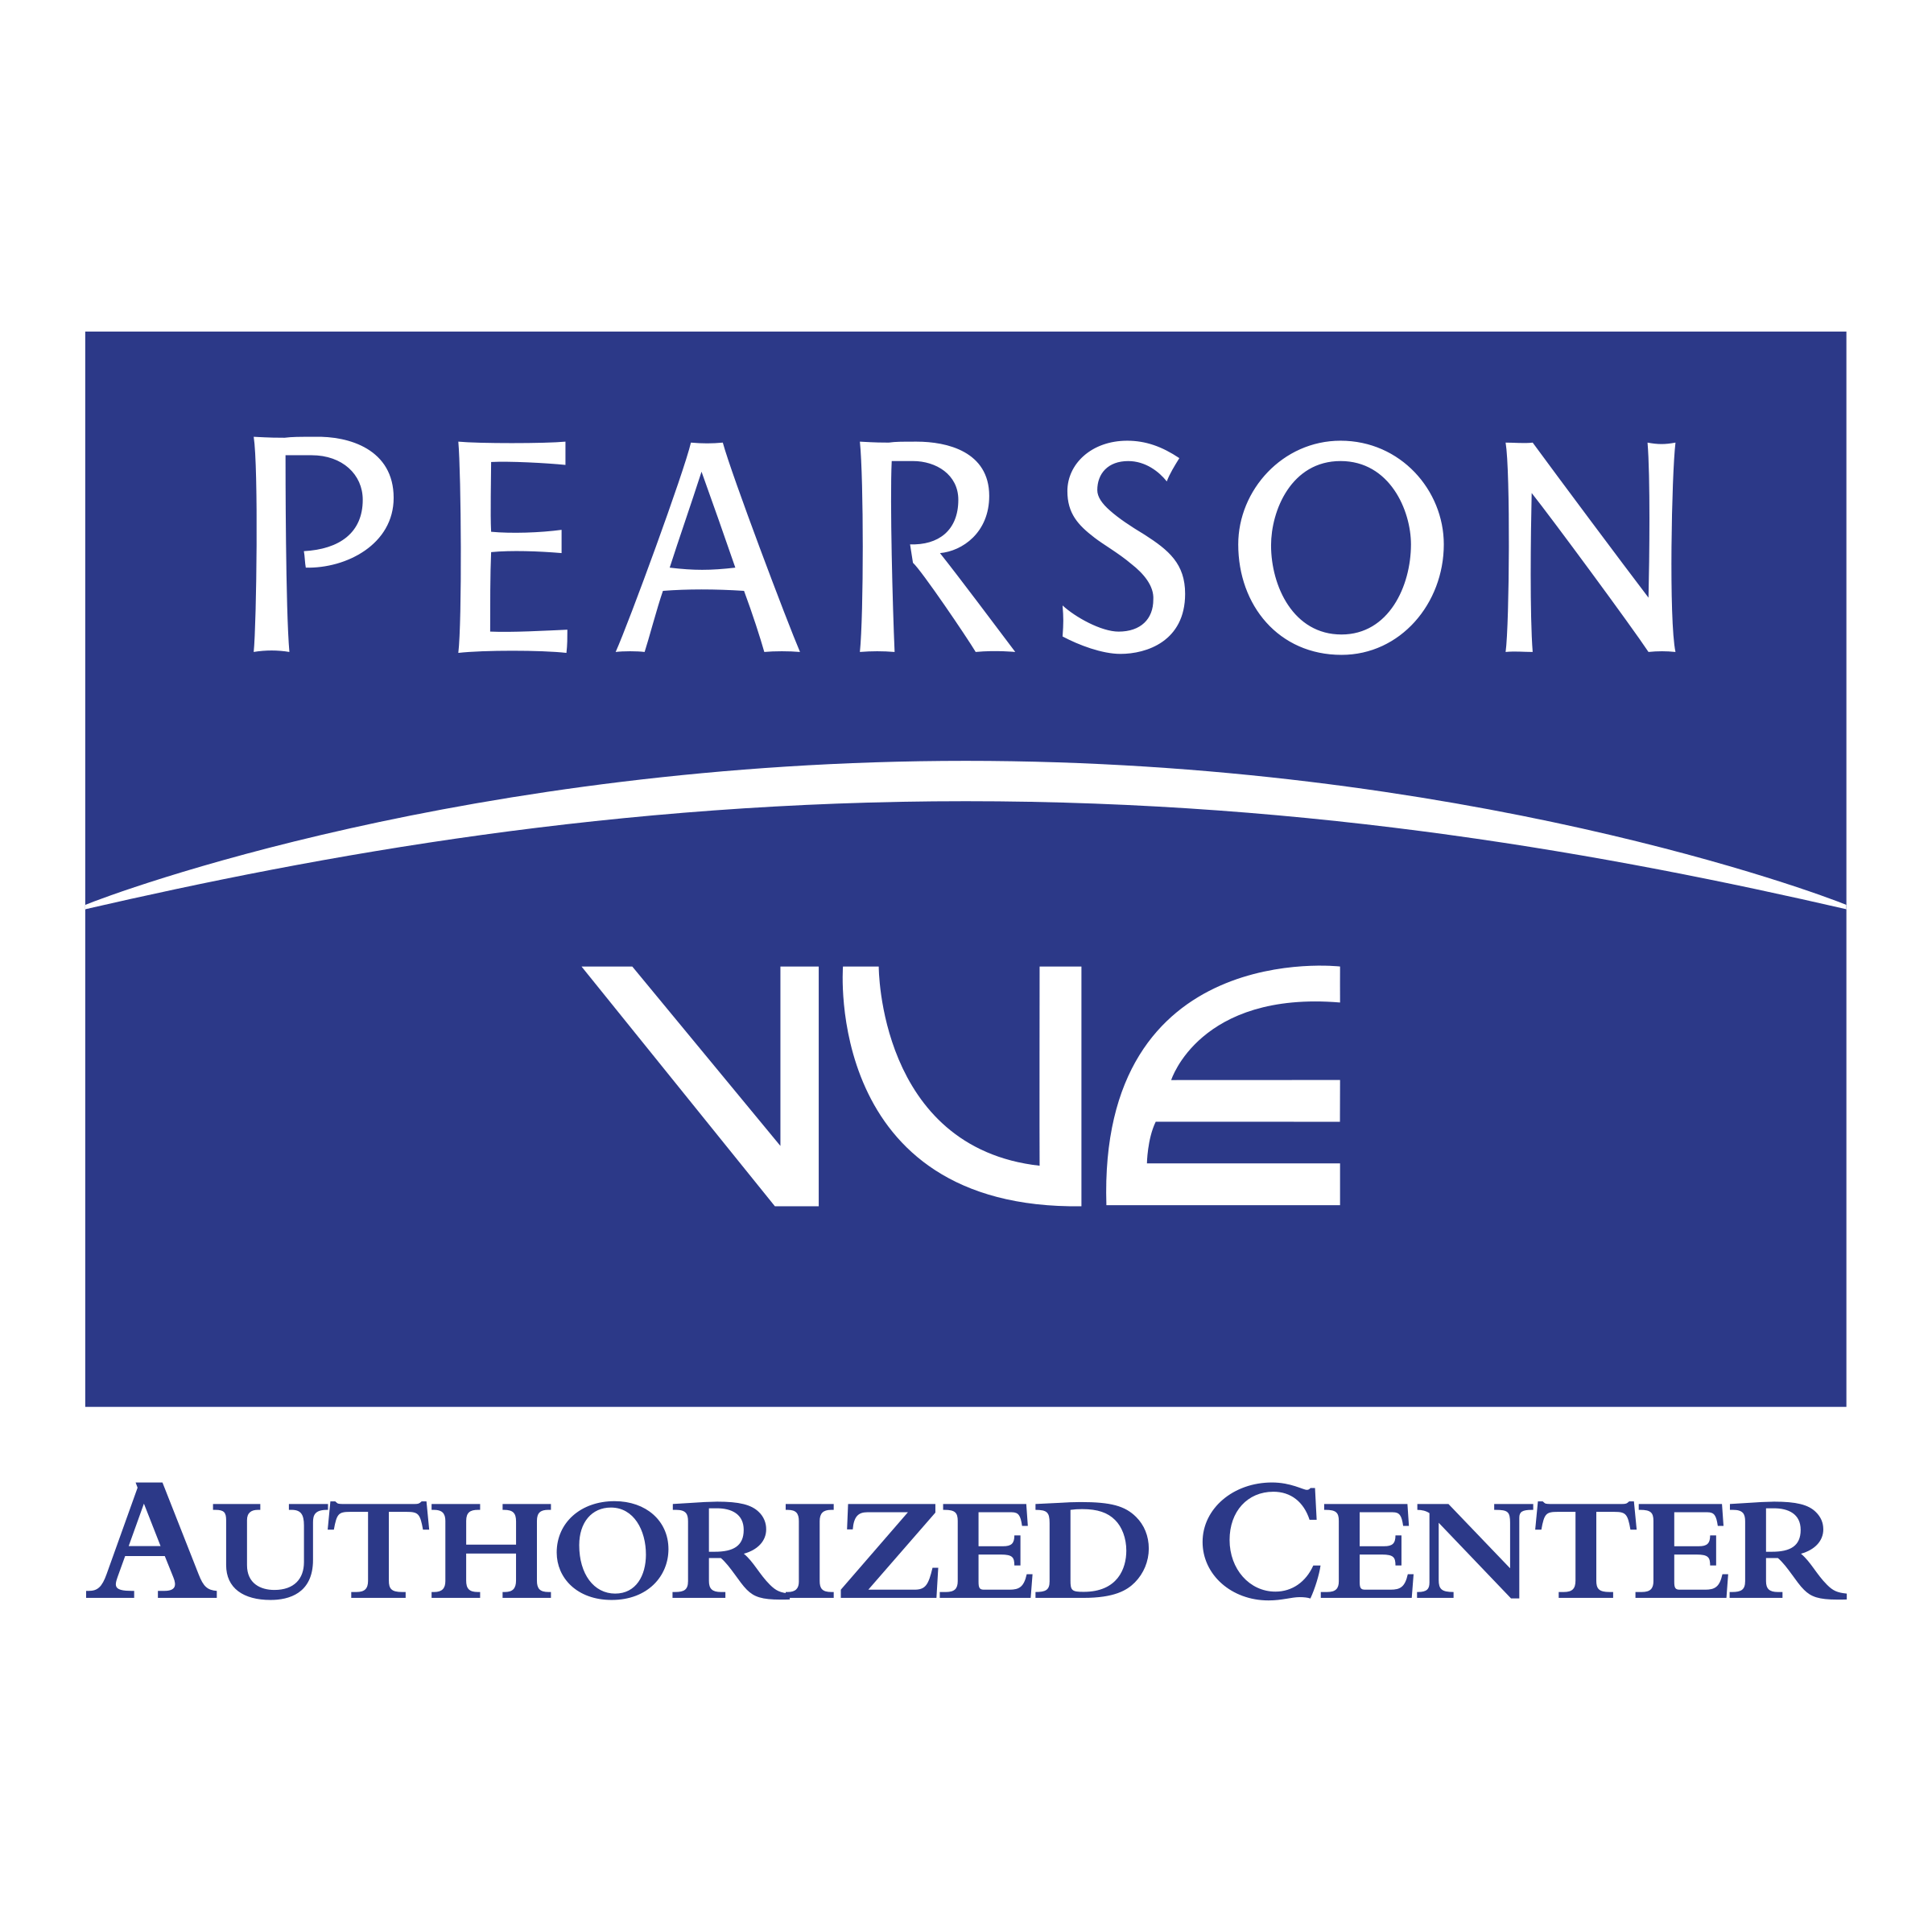 Pearson Logo - Pearson VUE Logo PNG Transparent & SVG Vector - Freebie Supply